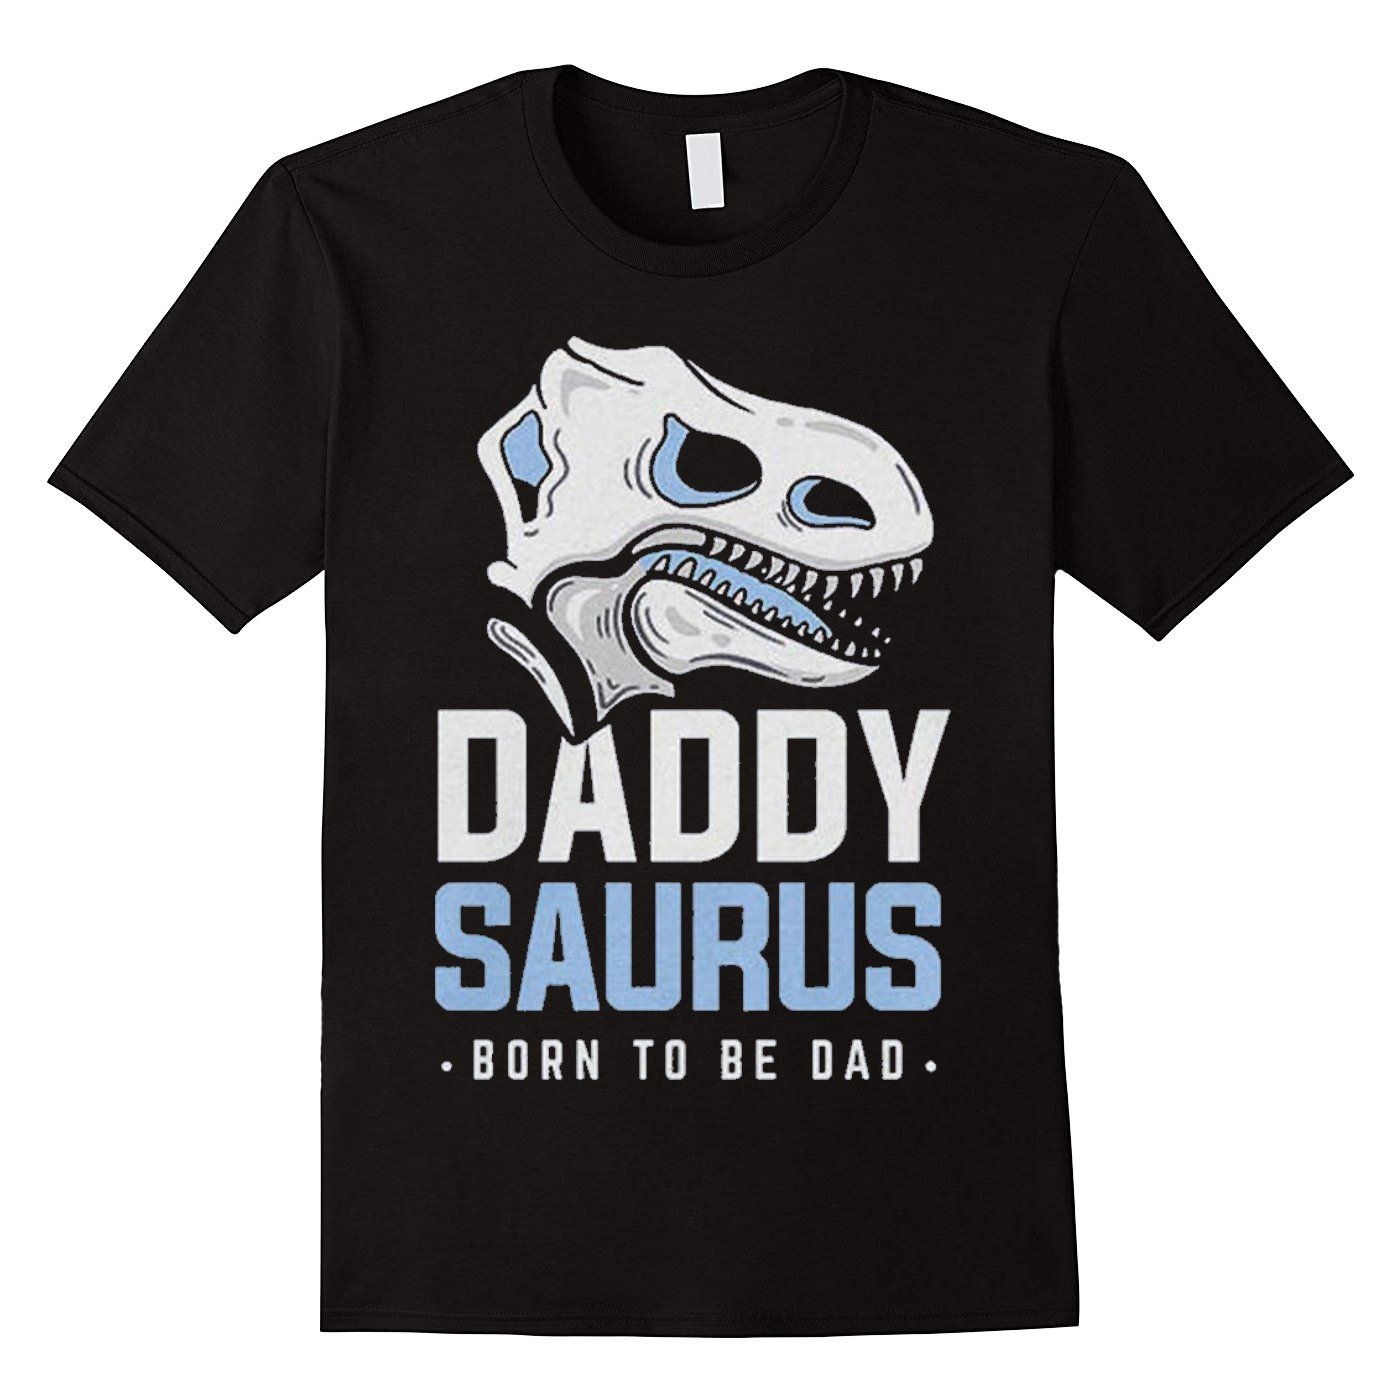 Daddysaurus T-Shirt